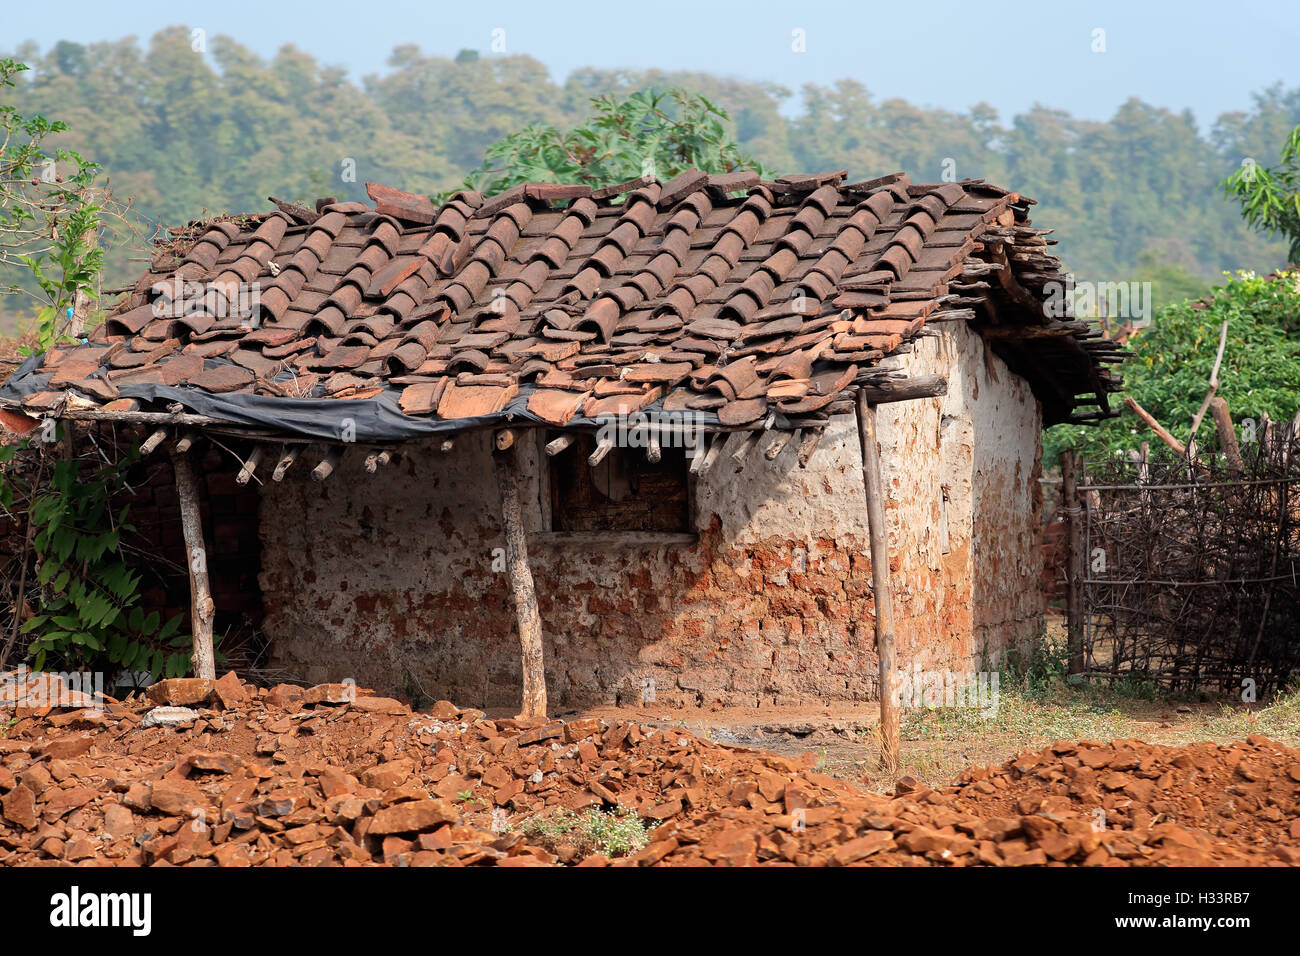 Un rurale indiano capanna rustica costruire da materiali naturali Foto Stock